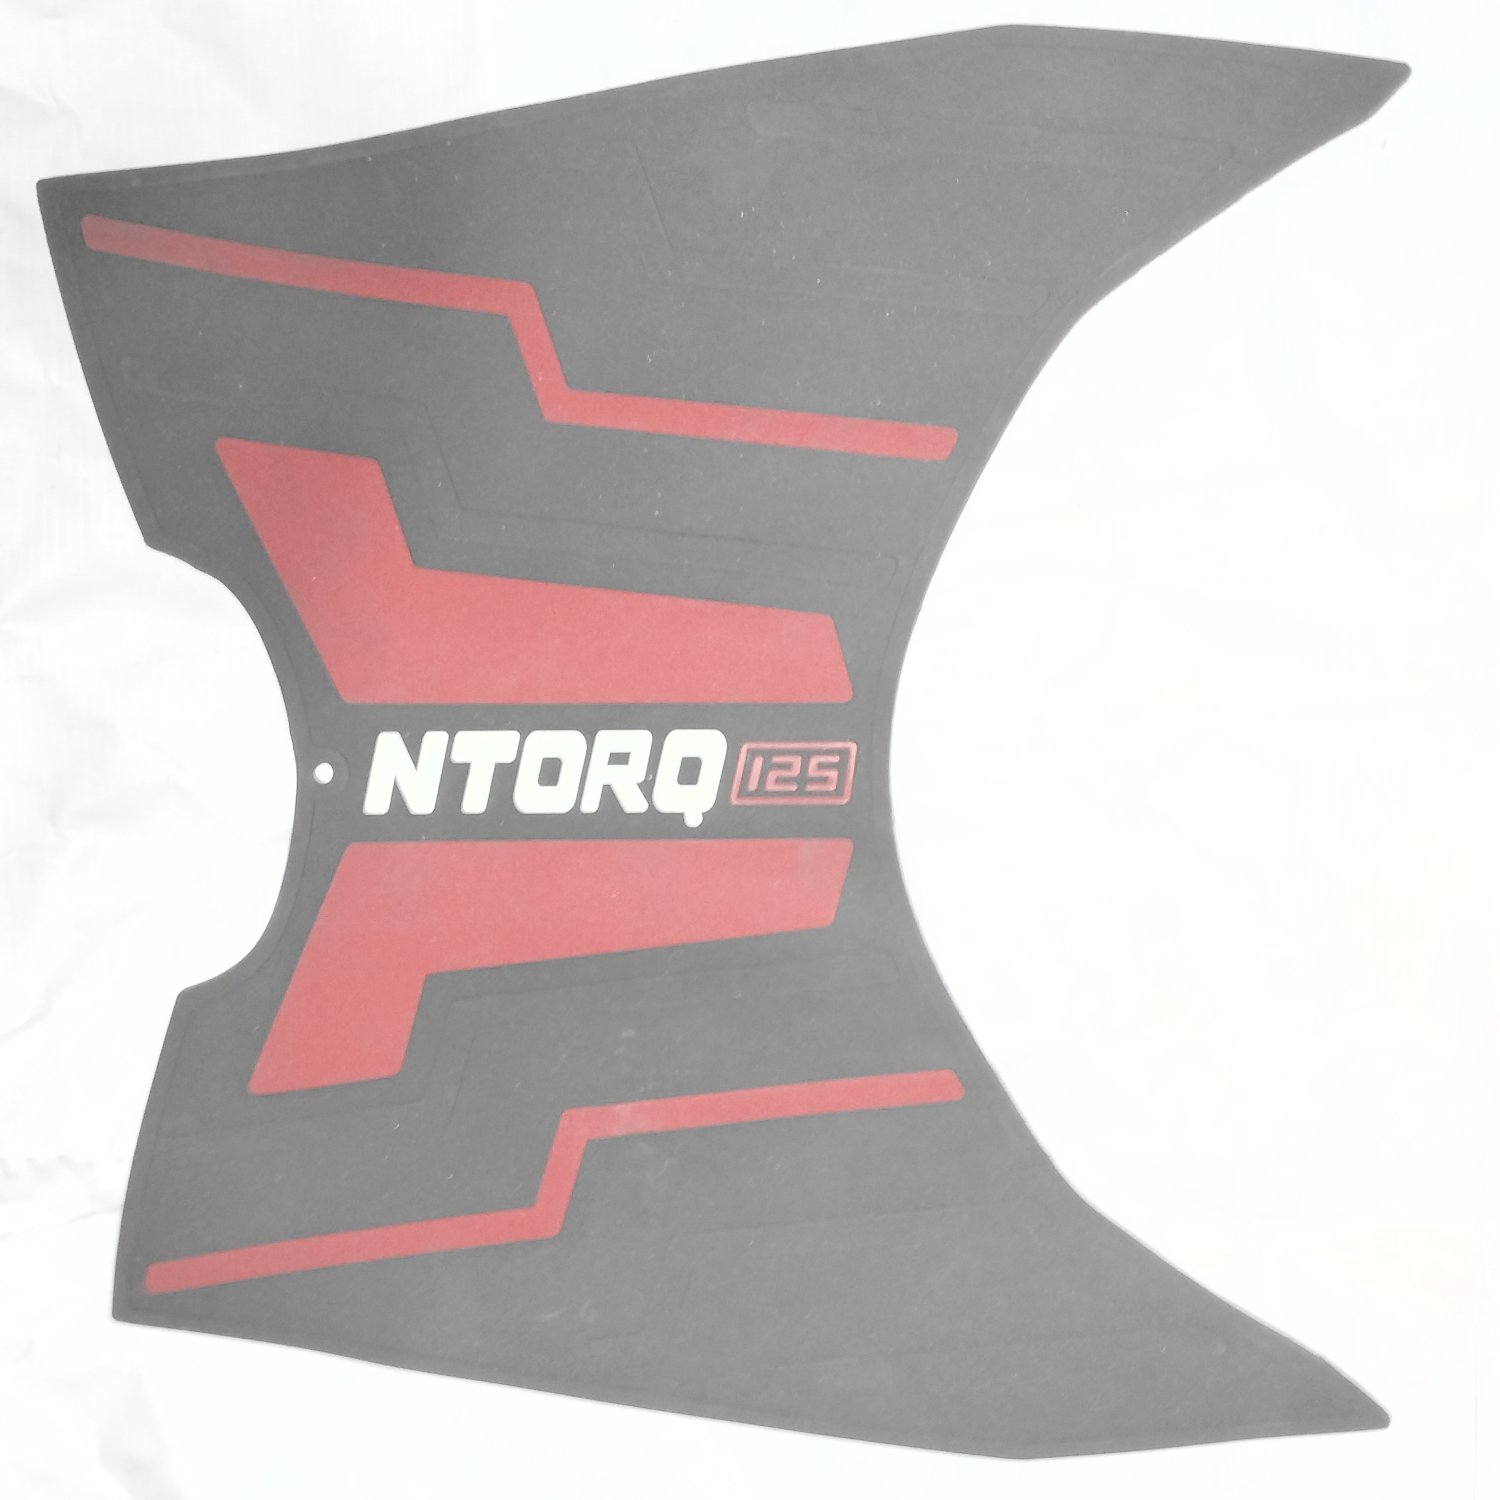 TVS Ntorq Race XP 125 Thor Edition Full Scooty Sticker Kit